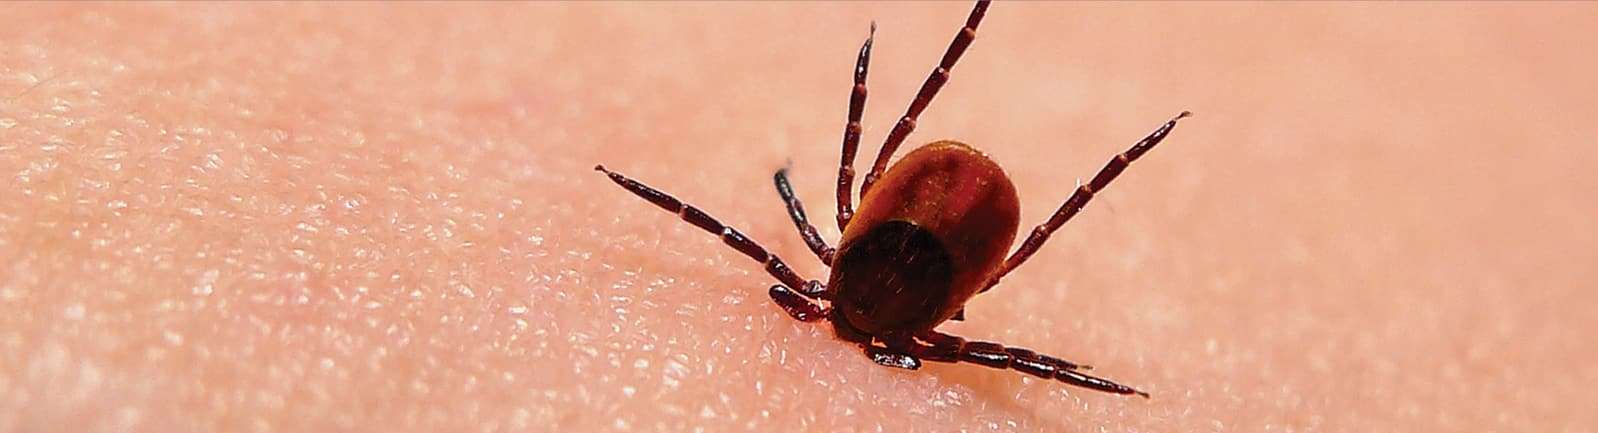 Bugs that Cause Lyme Disease